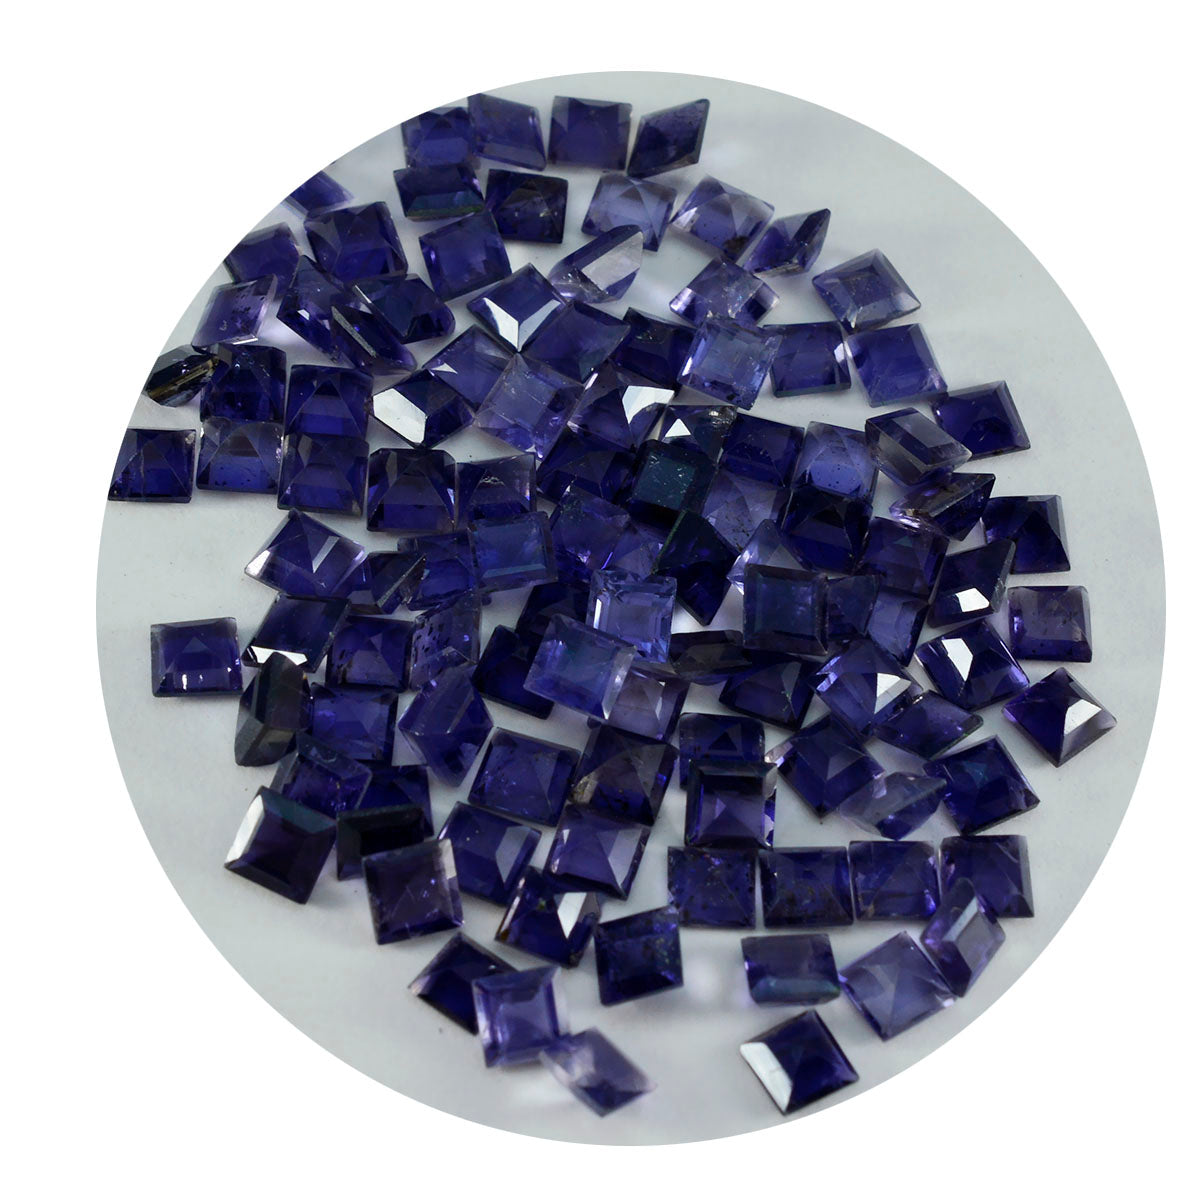 Riyogems 1PC Blue Iolite Faceted 5x5 mm Square Shape AA Quality Gems